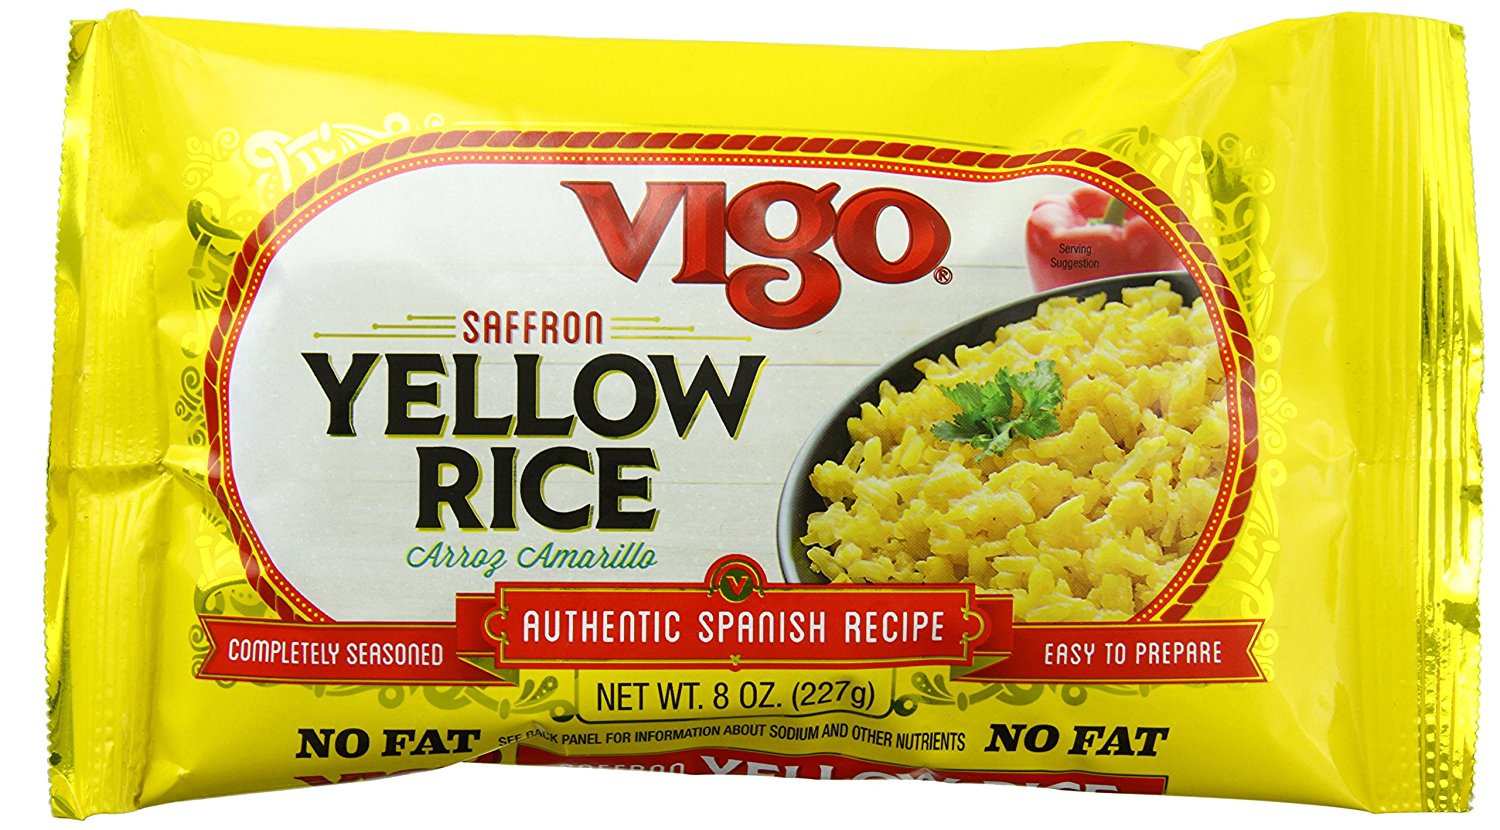 Vigo, Saffron Yellow Rice - 071072013724